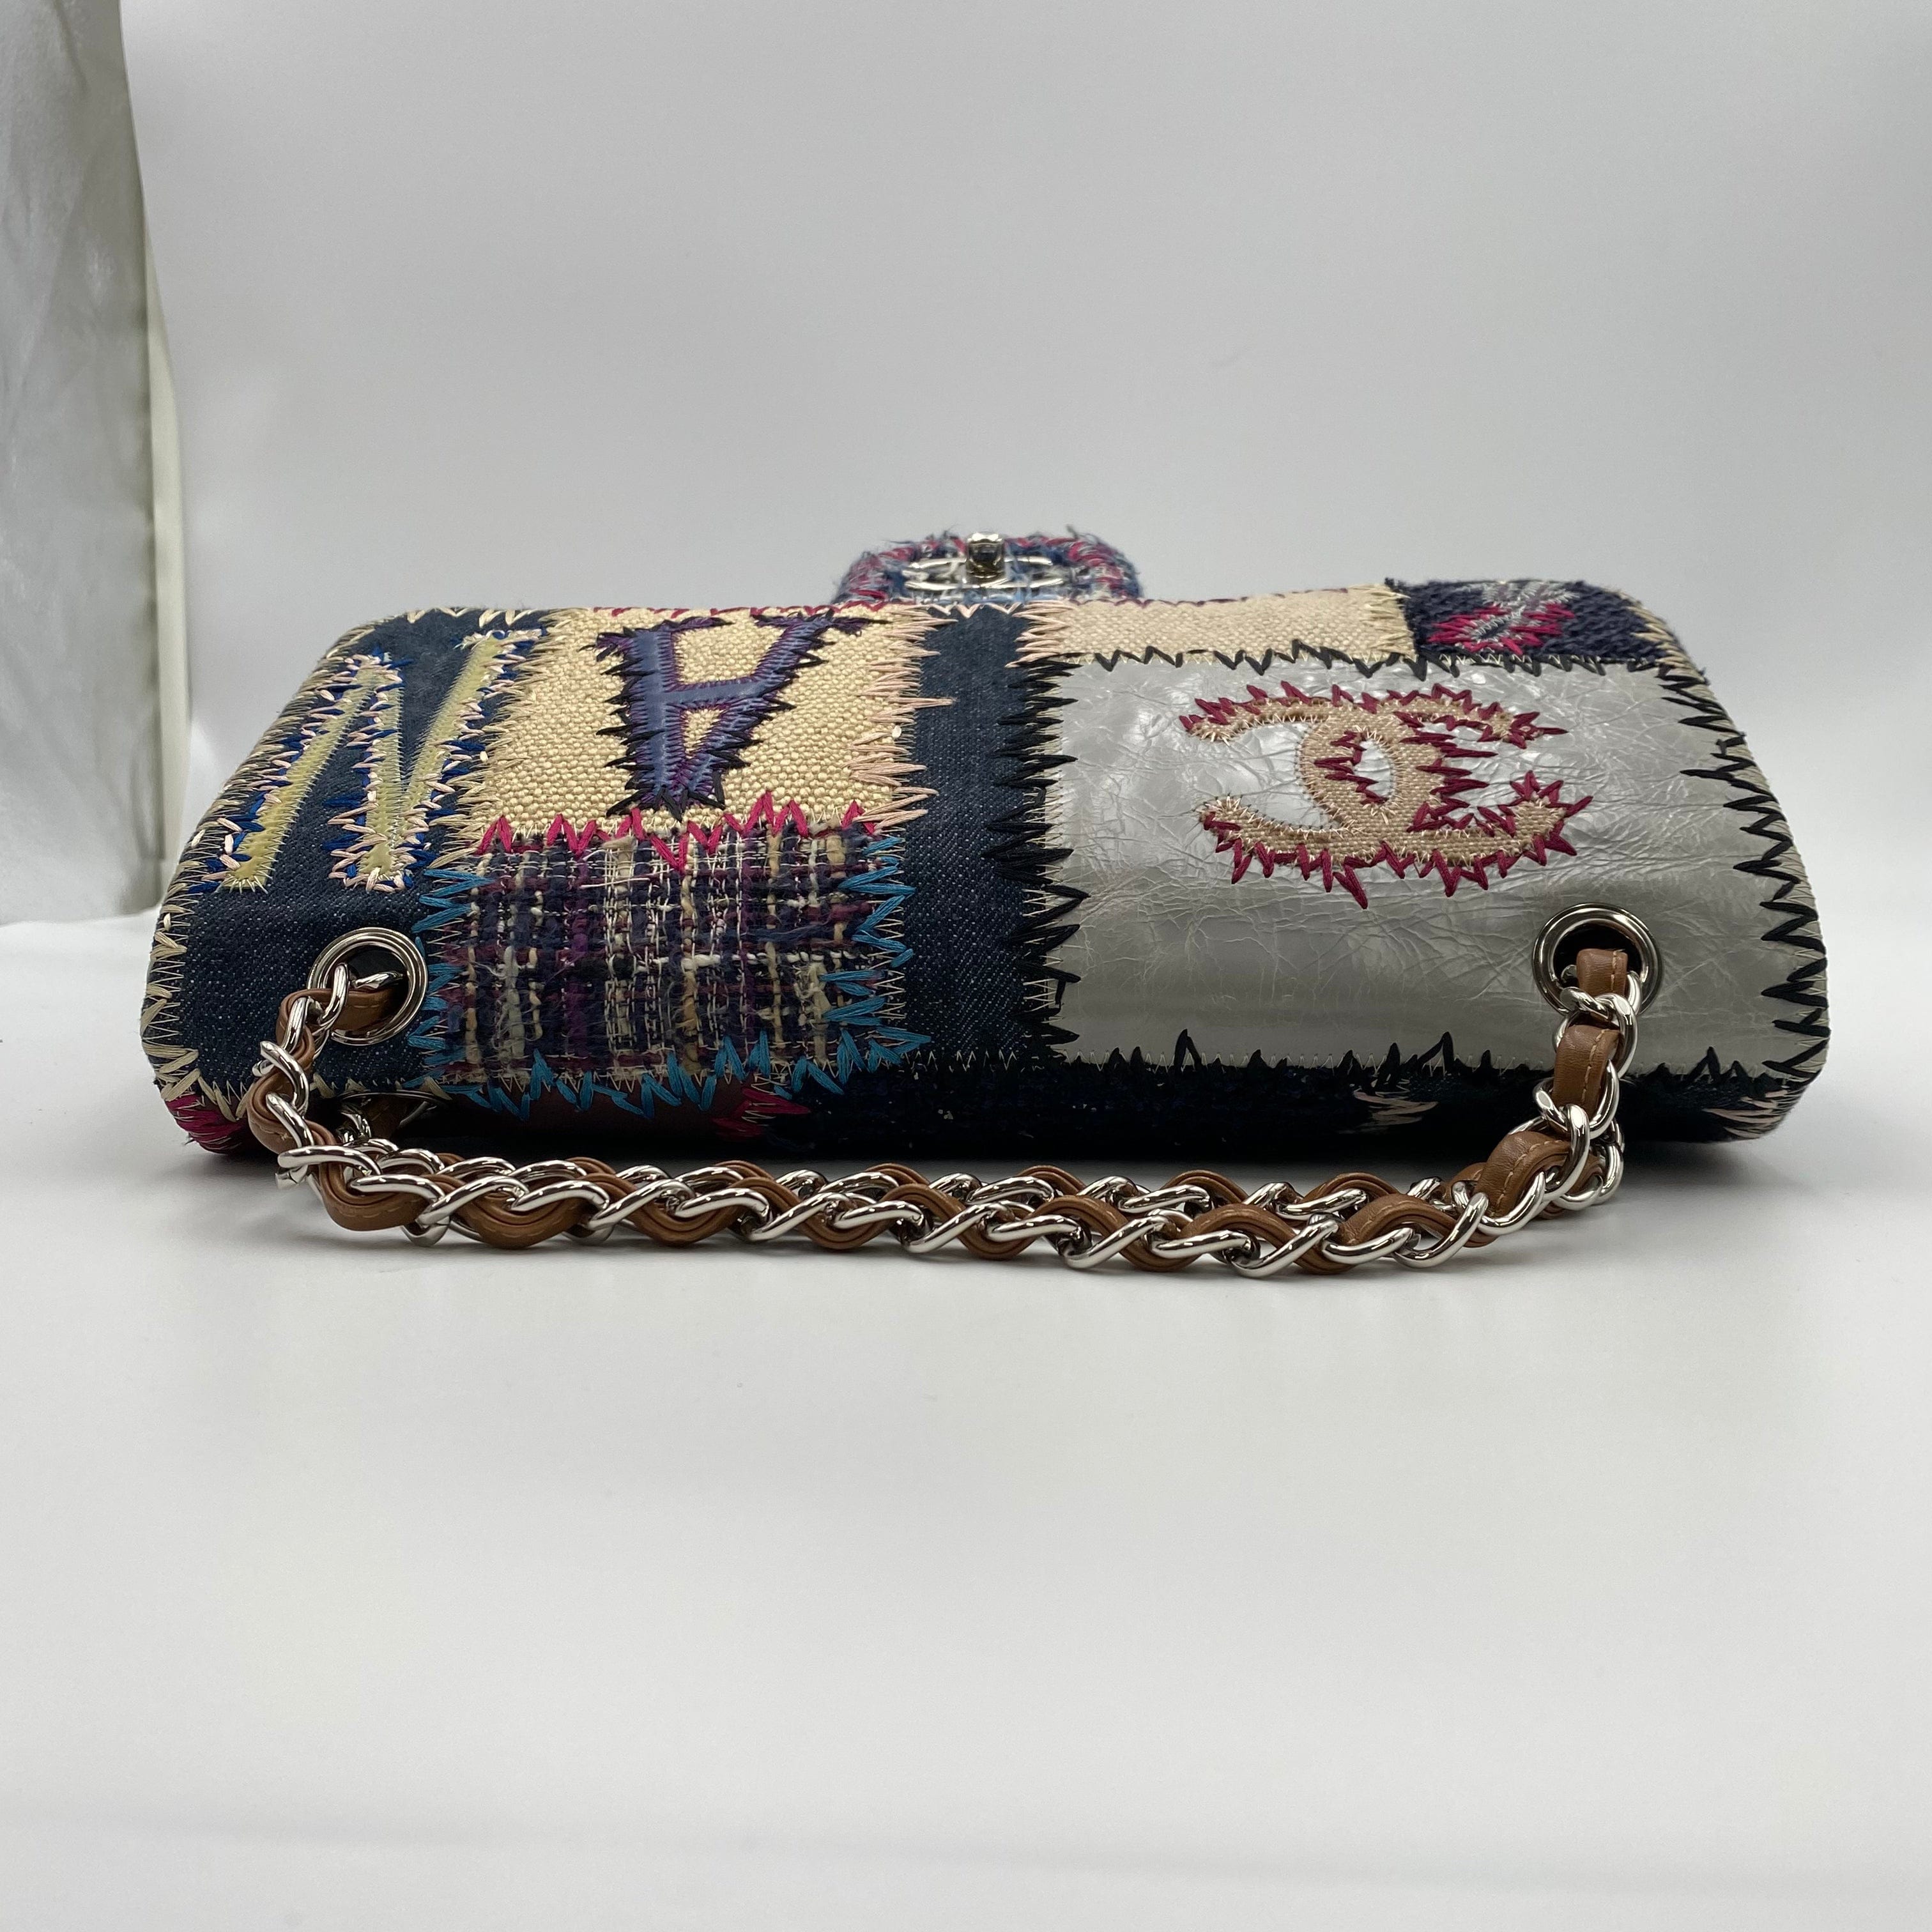 Chanel CHANEL CHAIN SHOULDER BAG PATCHWORK MULTICOLOR CANVAS LEATHER 90216499